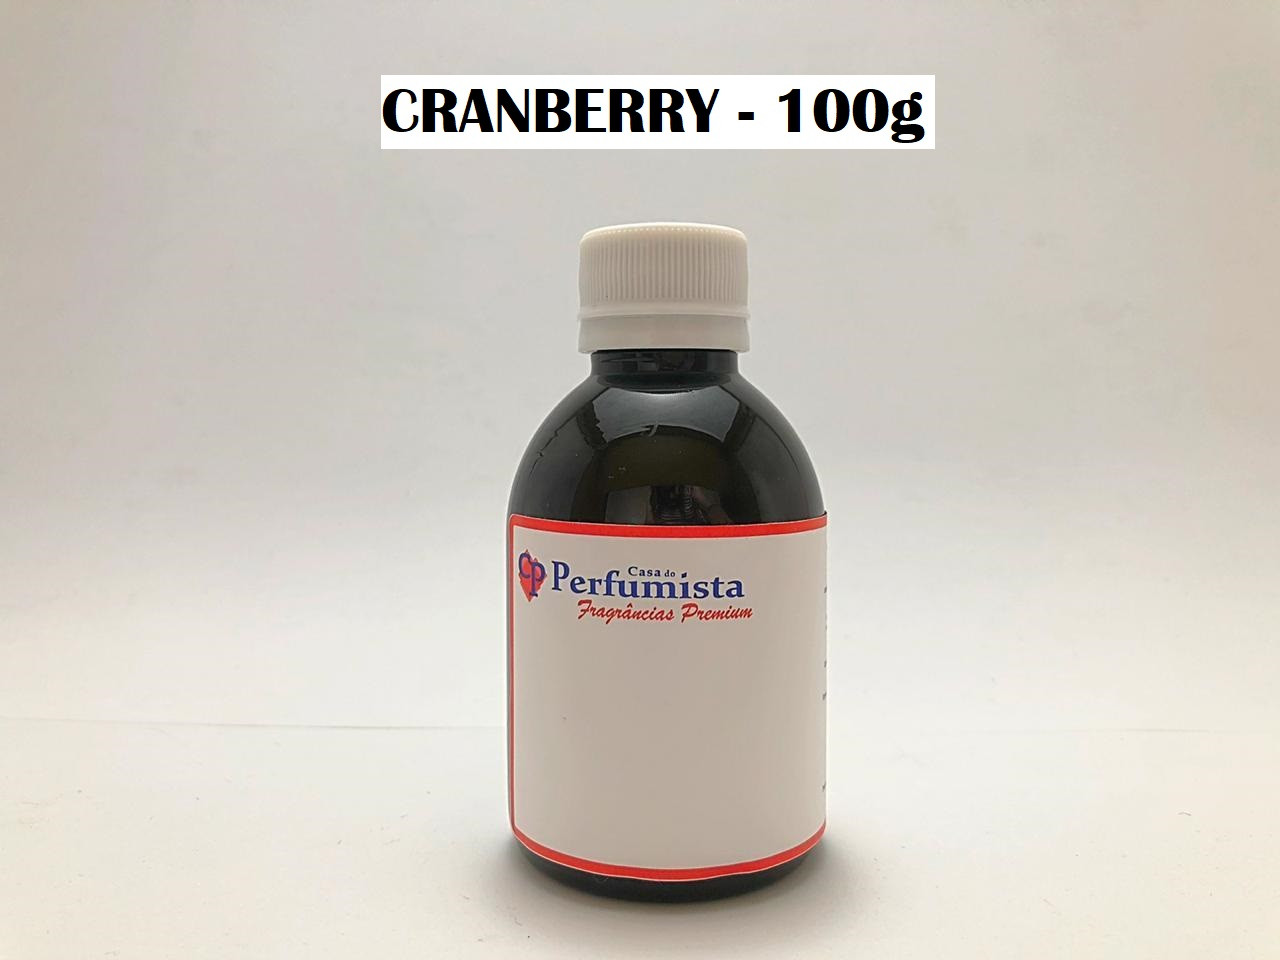 CRANBERRY - 100g